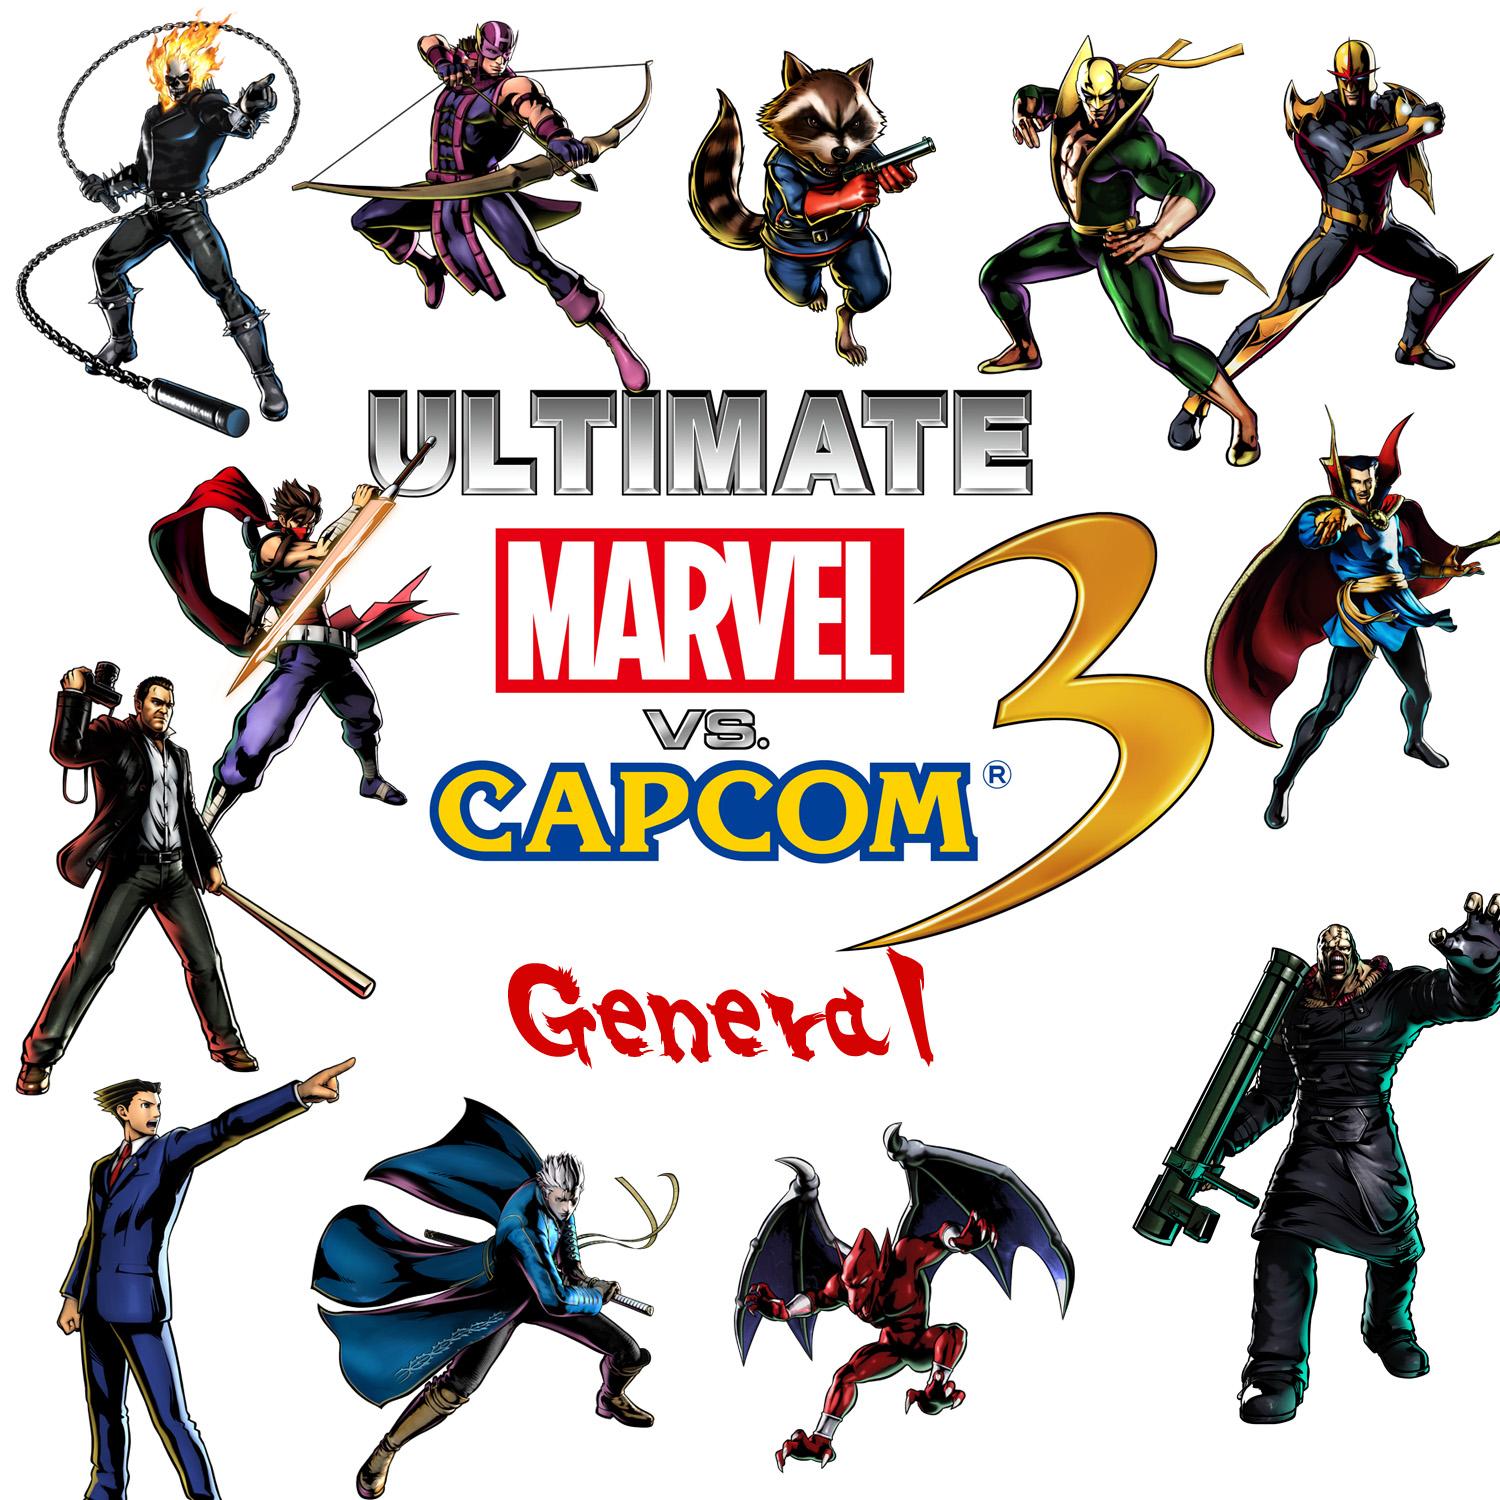 ultimate marvel va capcom 3 nuevos personajes Capcom confirma Ultimate Marvel vs. Capcom 3